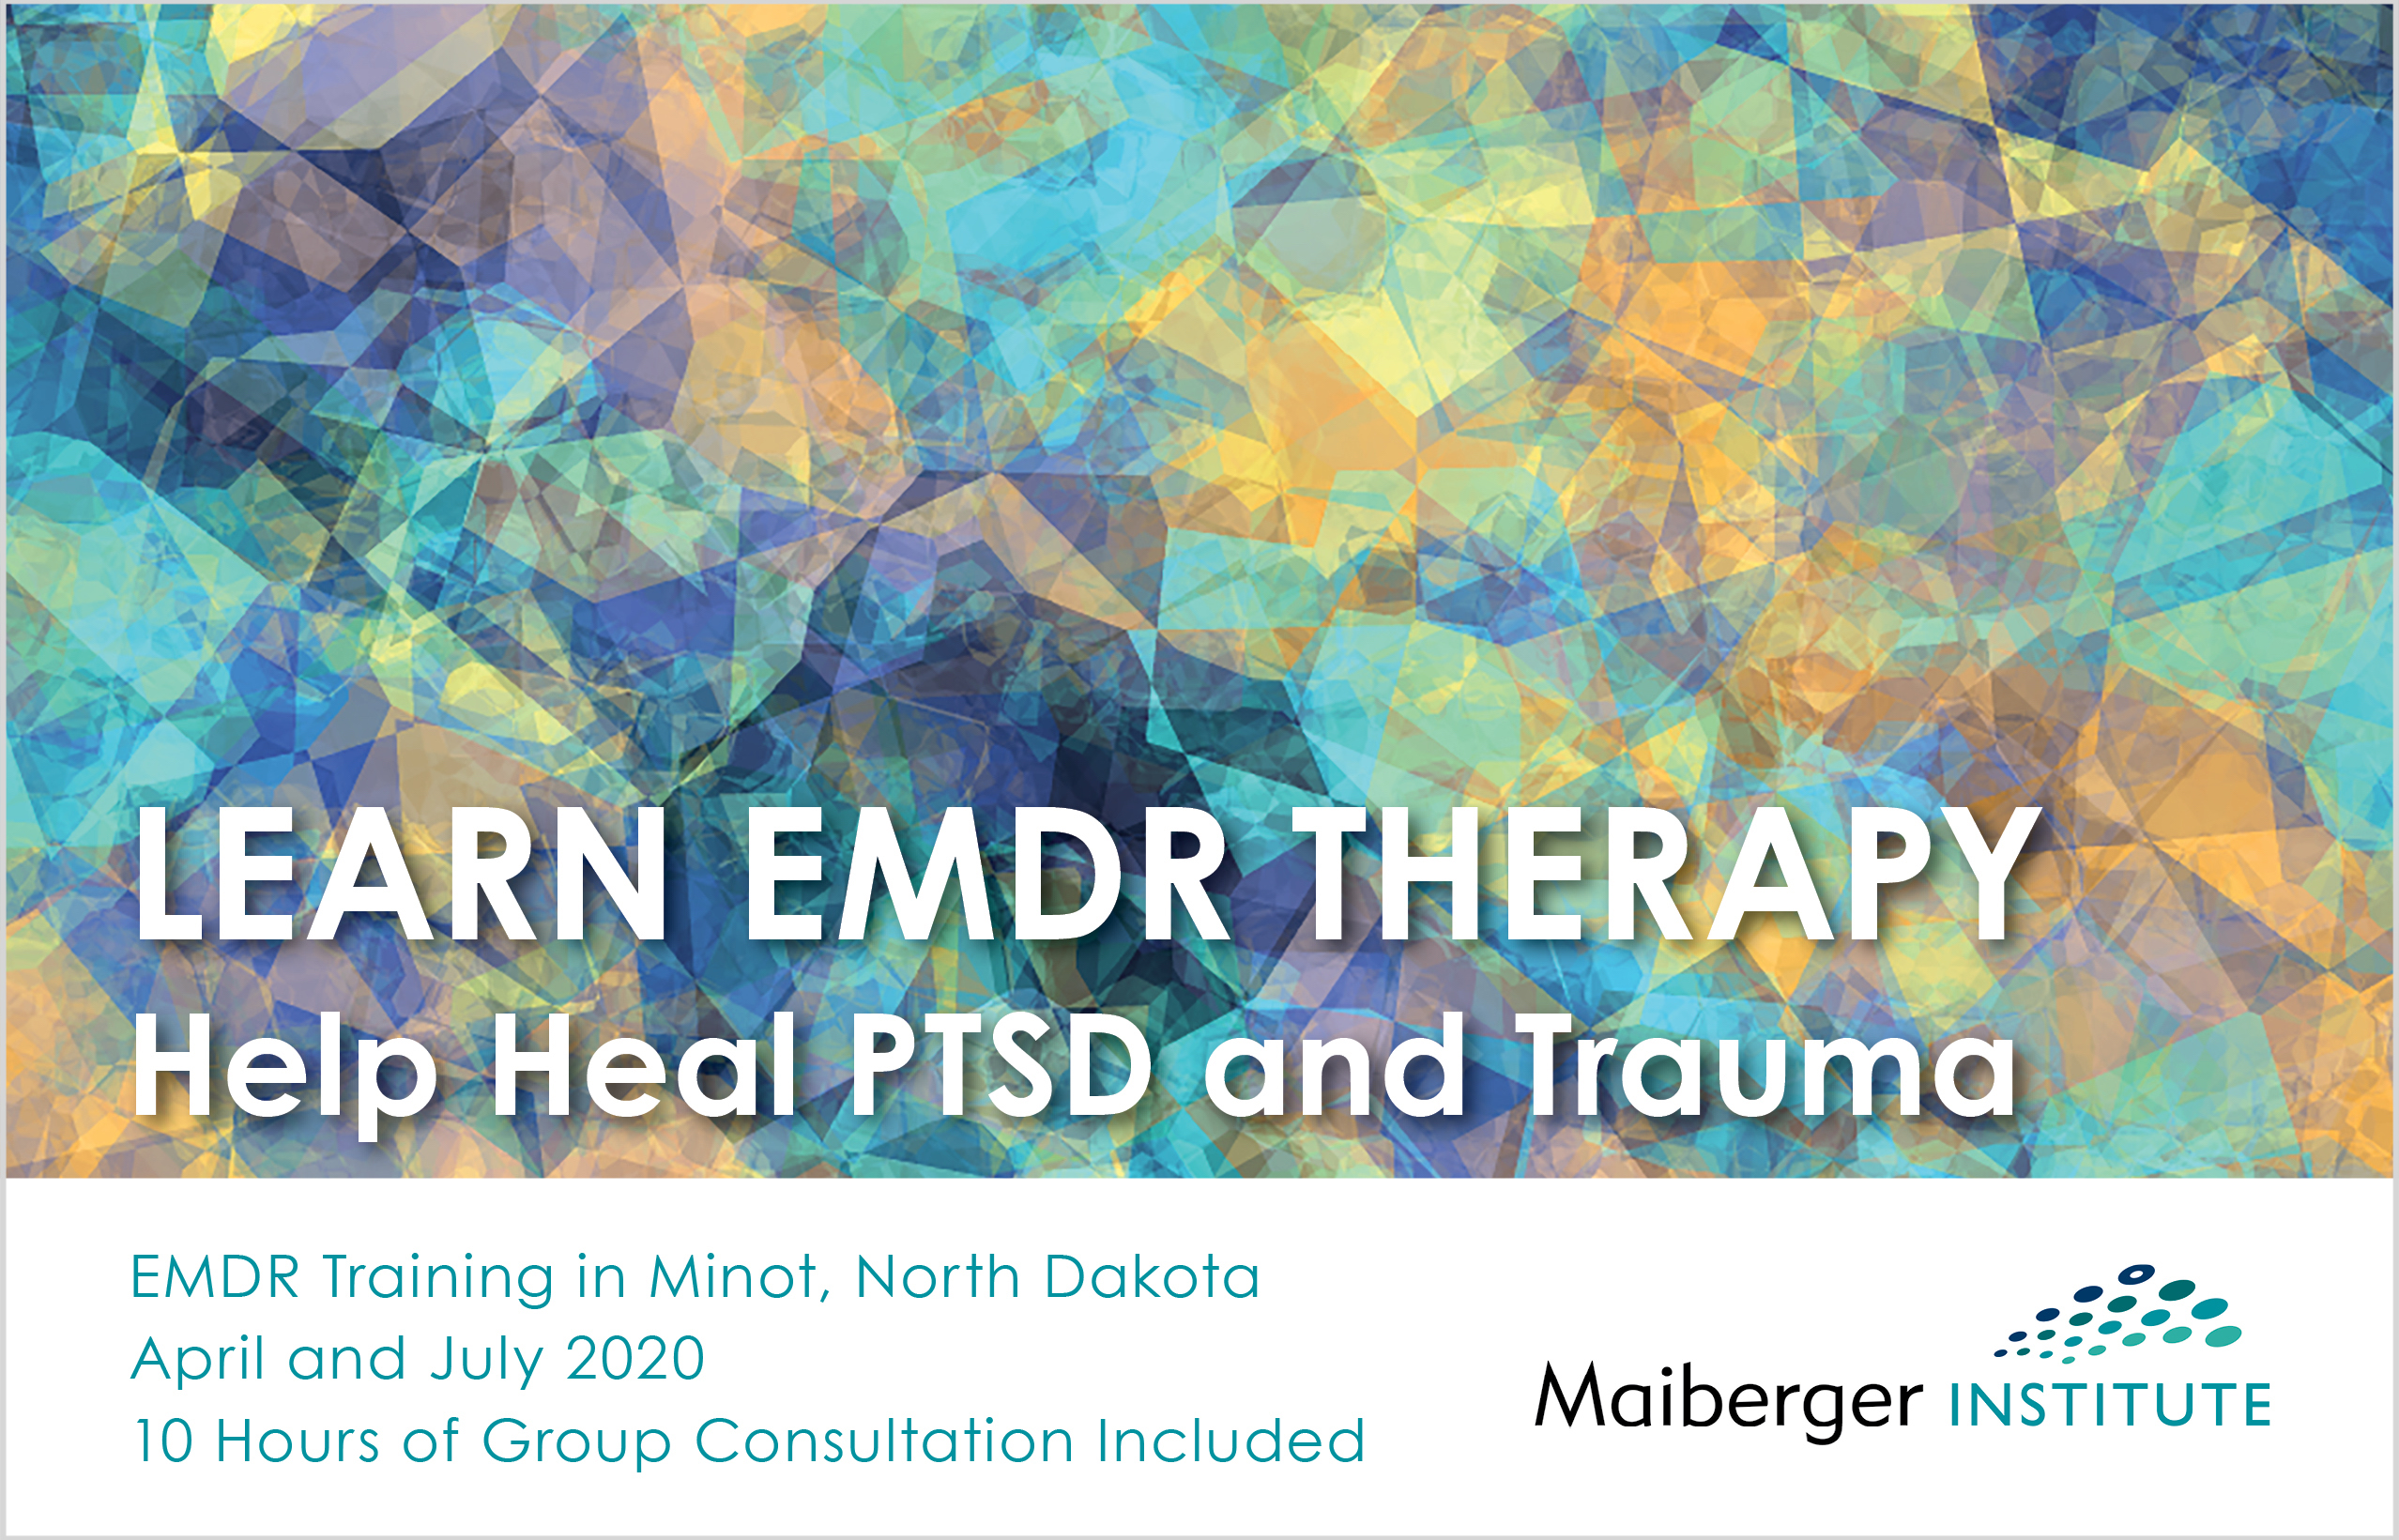 EMDR Training in Minot, North Dakota - April and July 2020